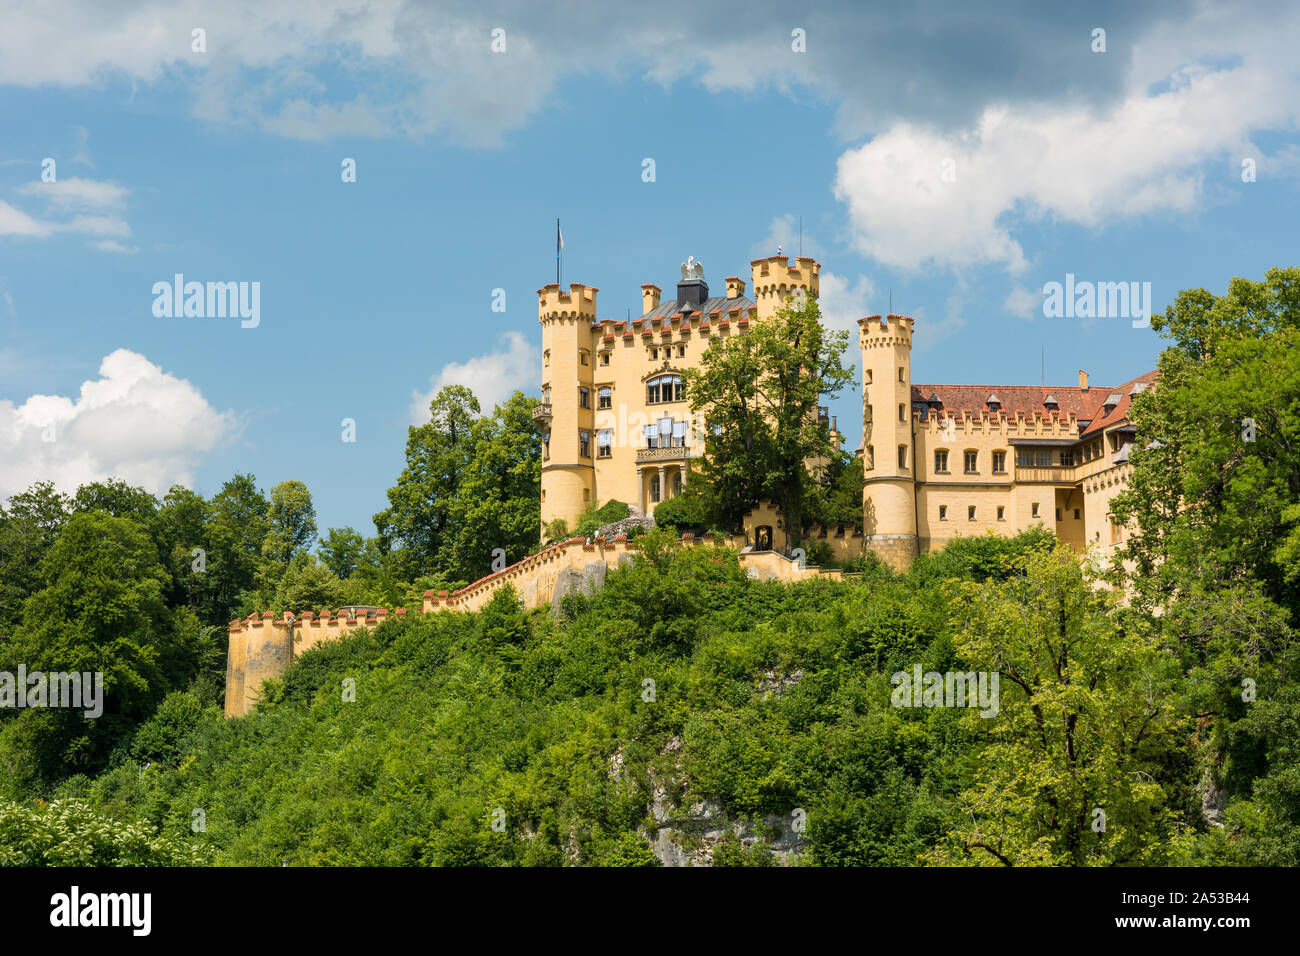 Postcard view of spectacular Romanesque Revival fairytale castle. Stock Photo